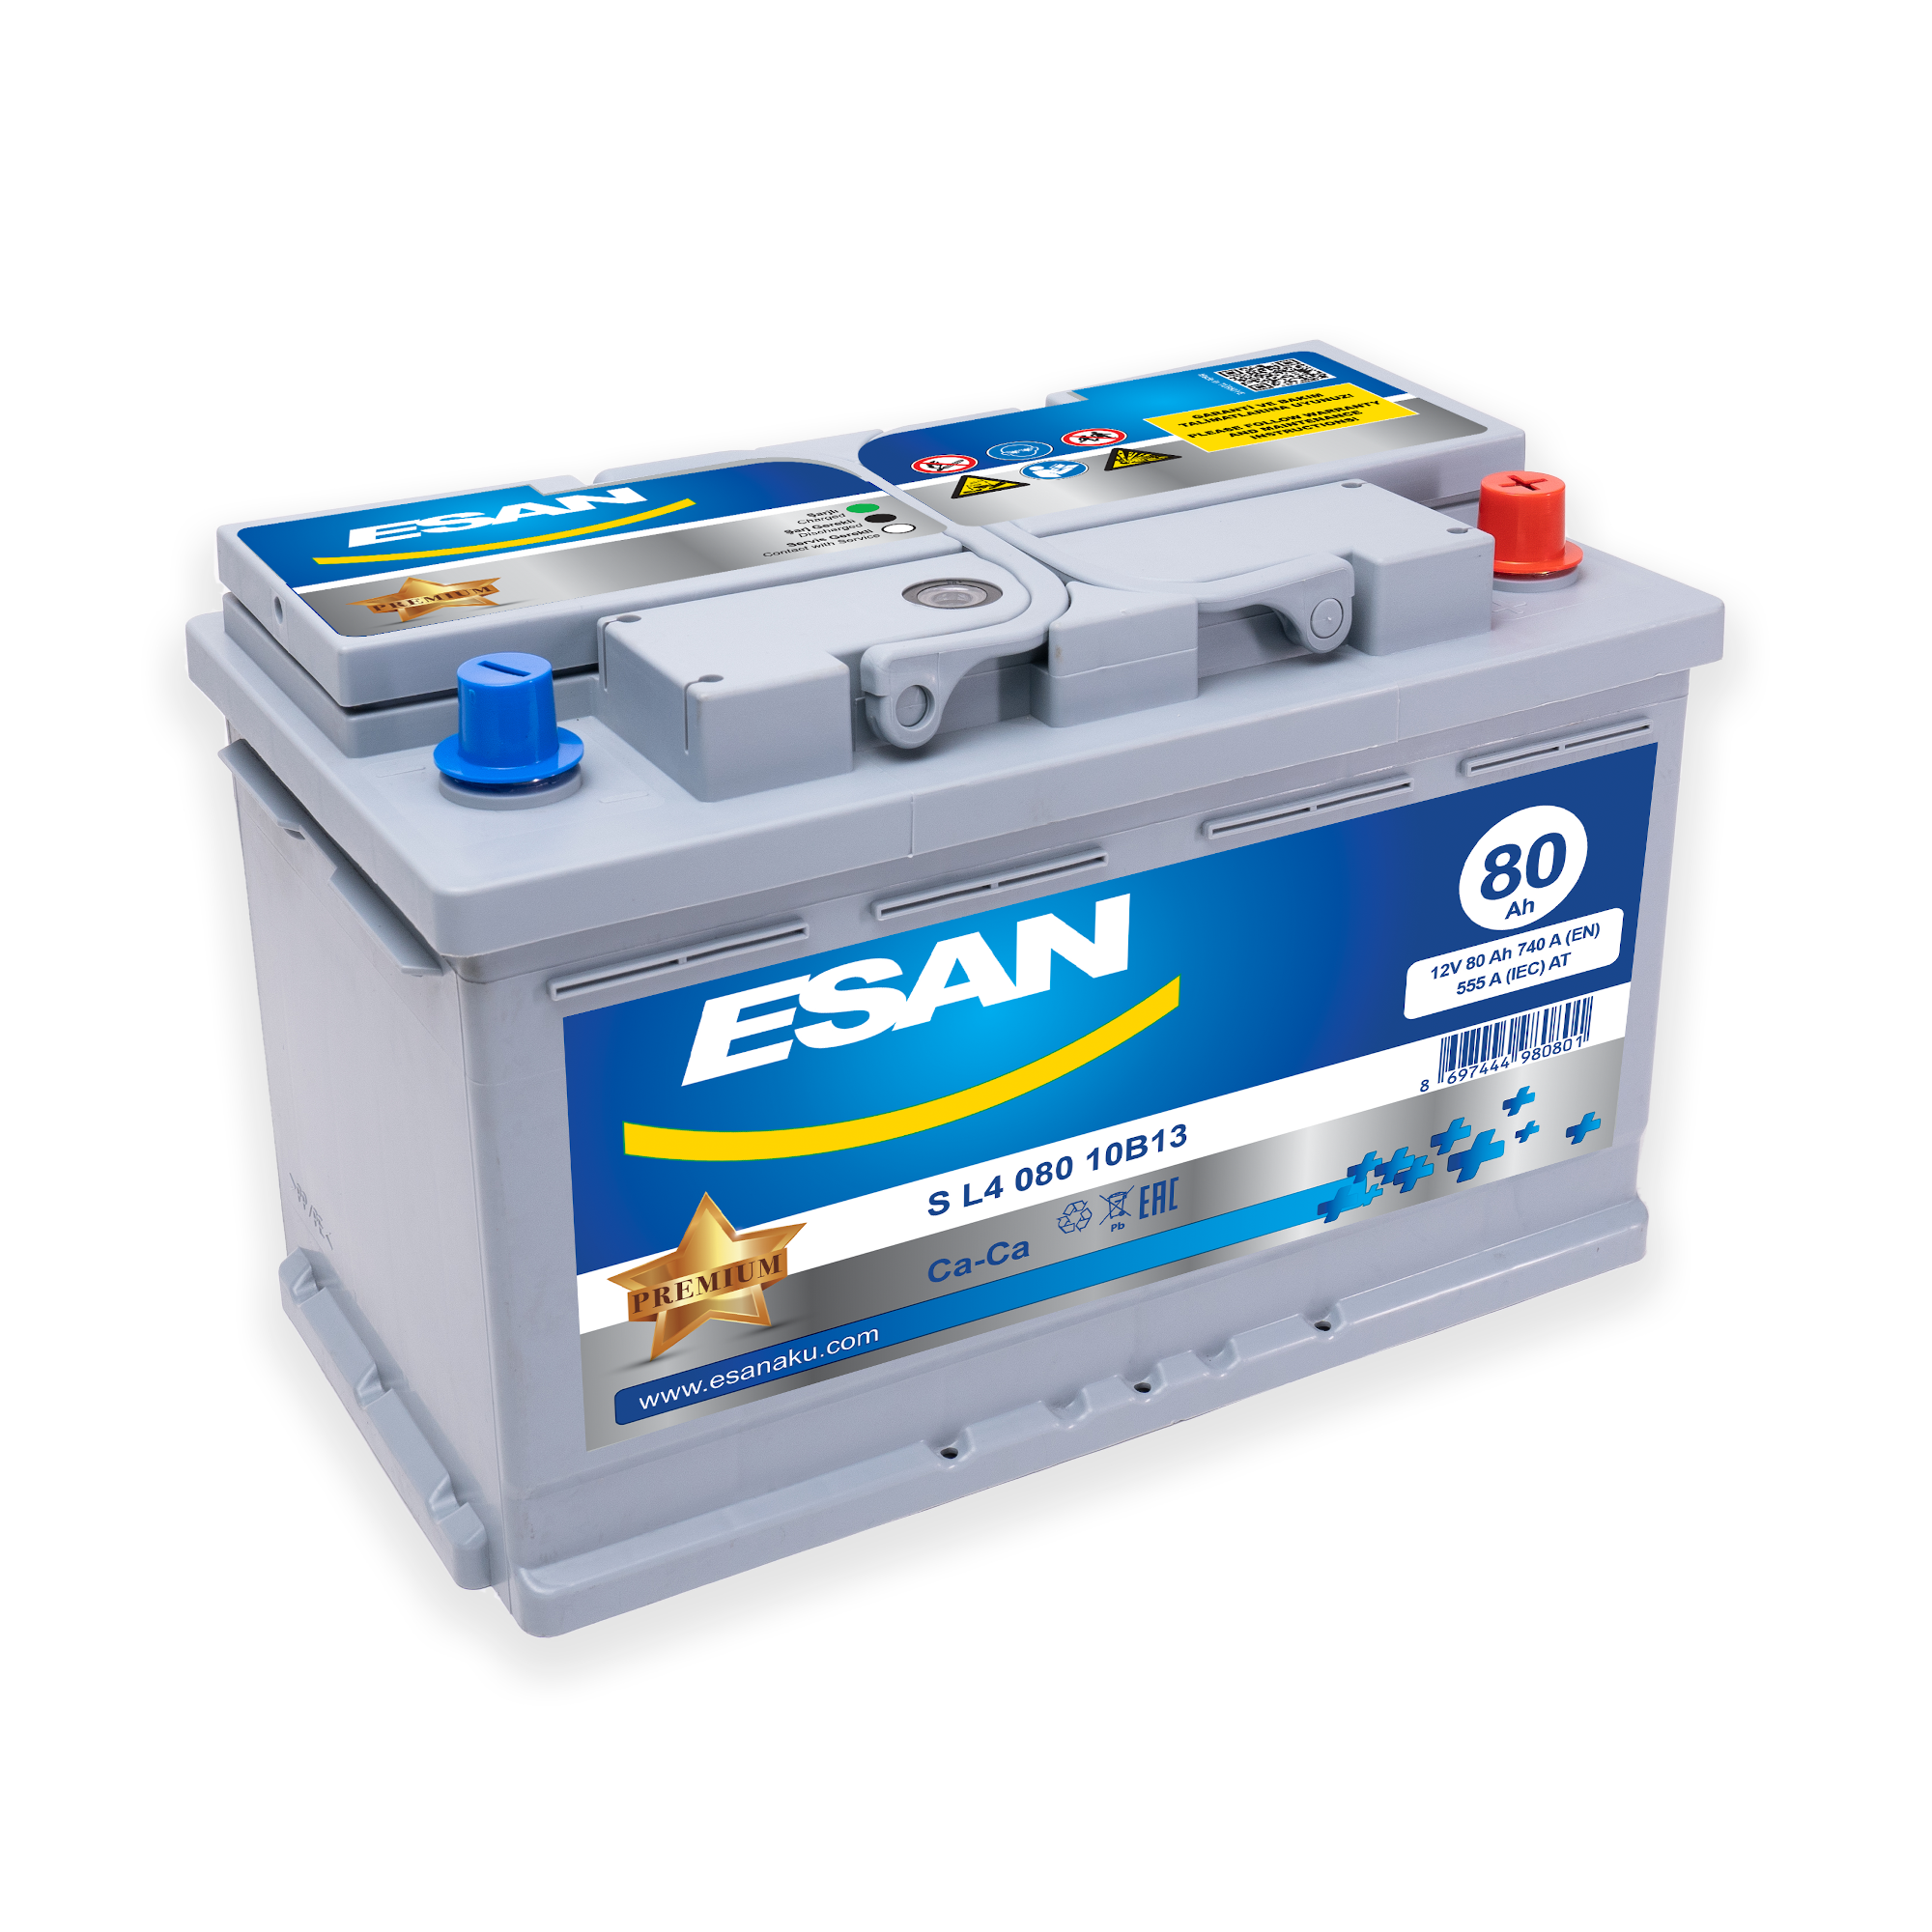 Автомобильная аккумуляторная батарея ESAN SMF S L4 080 10B13, 80 Ач, L4 DIN, 0/1